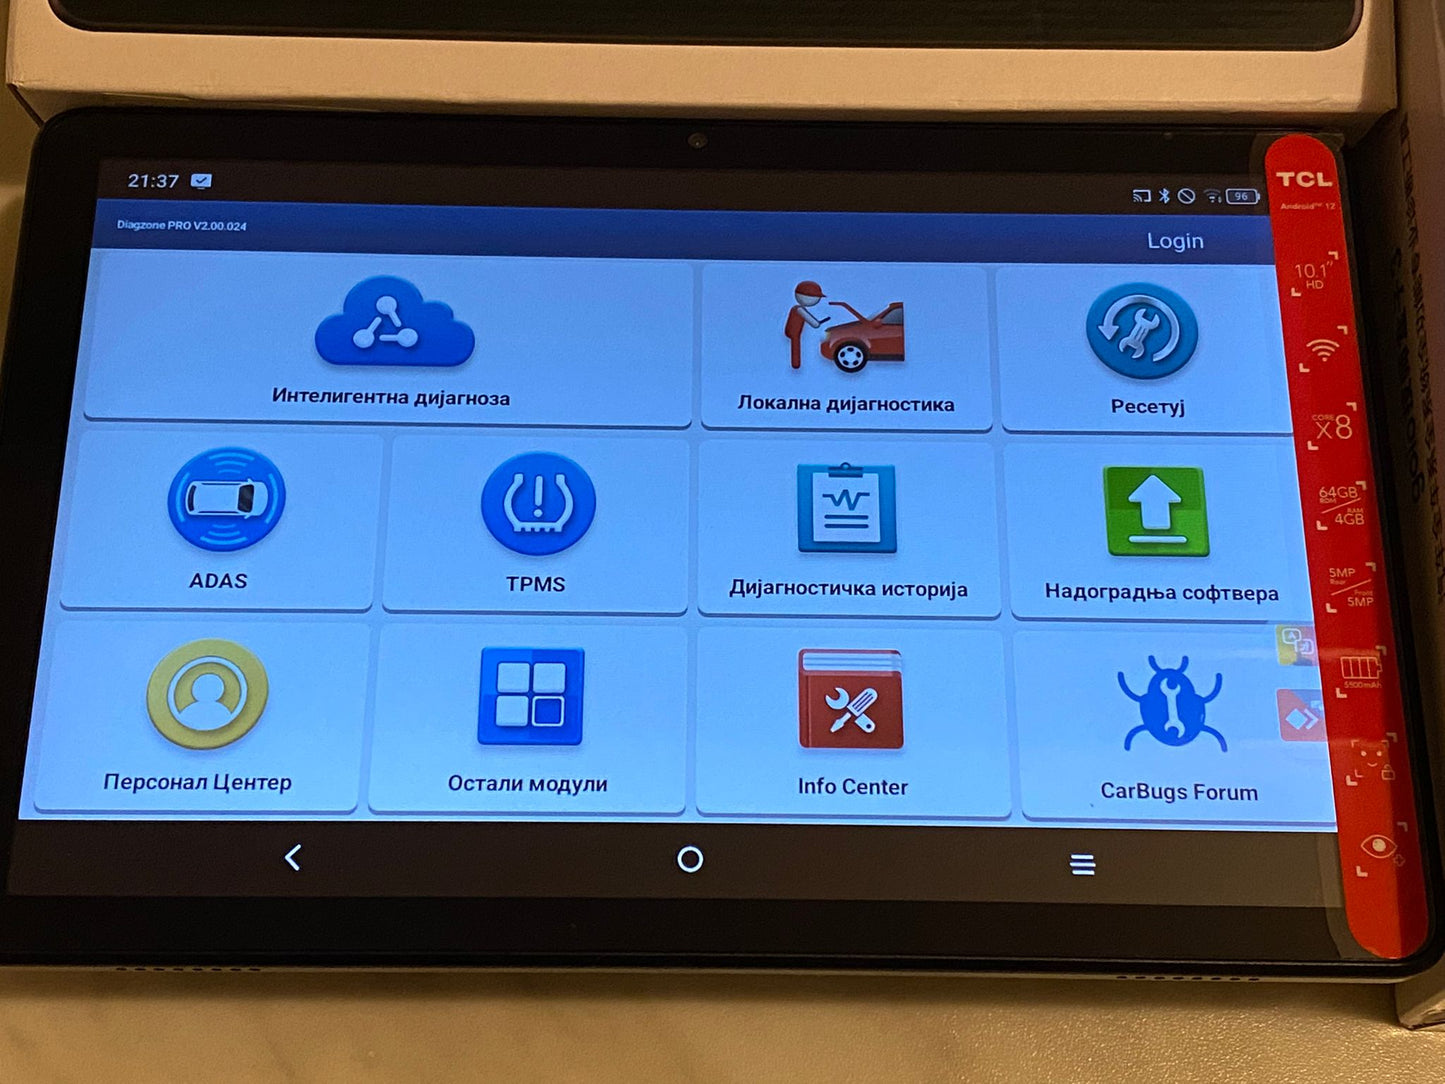 Launch GOLO 3 Univerzalna Auto Dijagnostika + Tablet